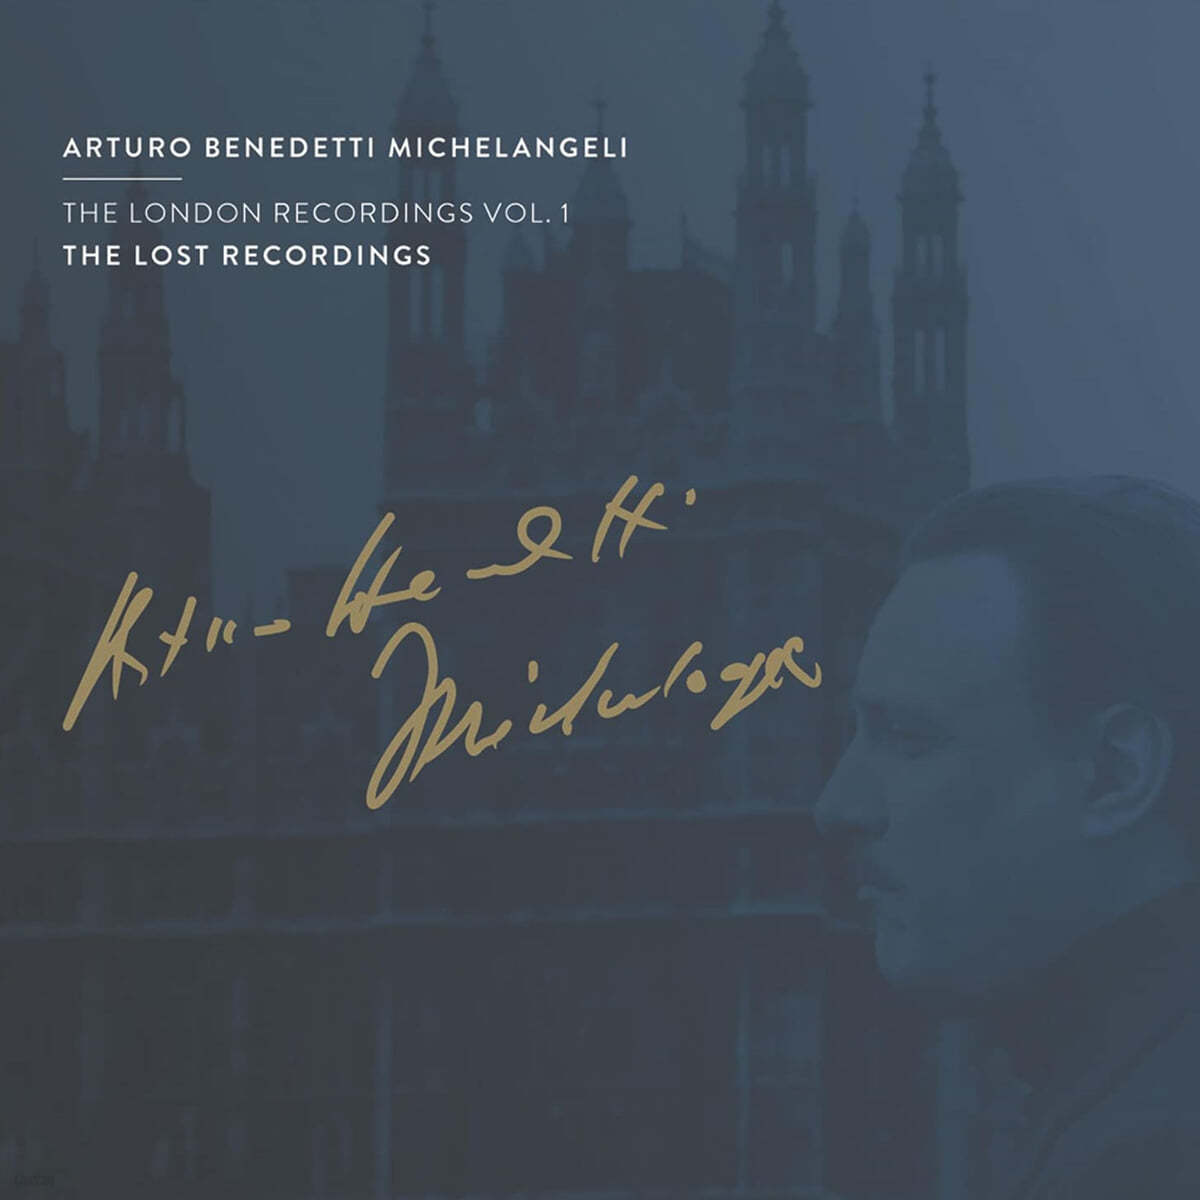 Arturo Benedetti Michelangeli 아르투로 베네데티 미켈란젤리 런던 레코딩 1집 (The London Recordings Vol. 1)